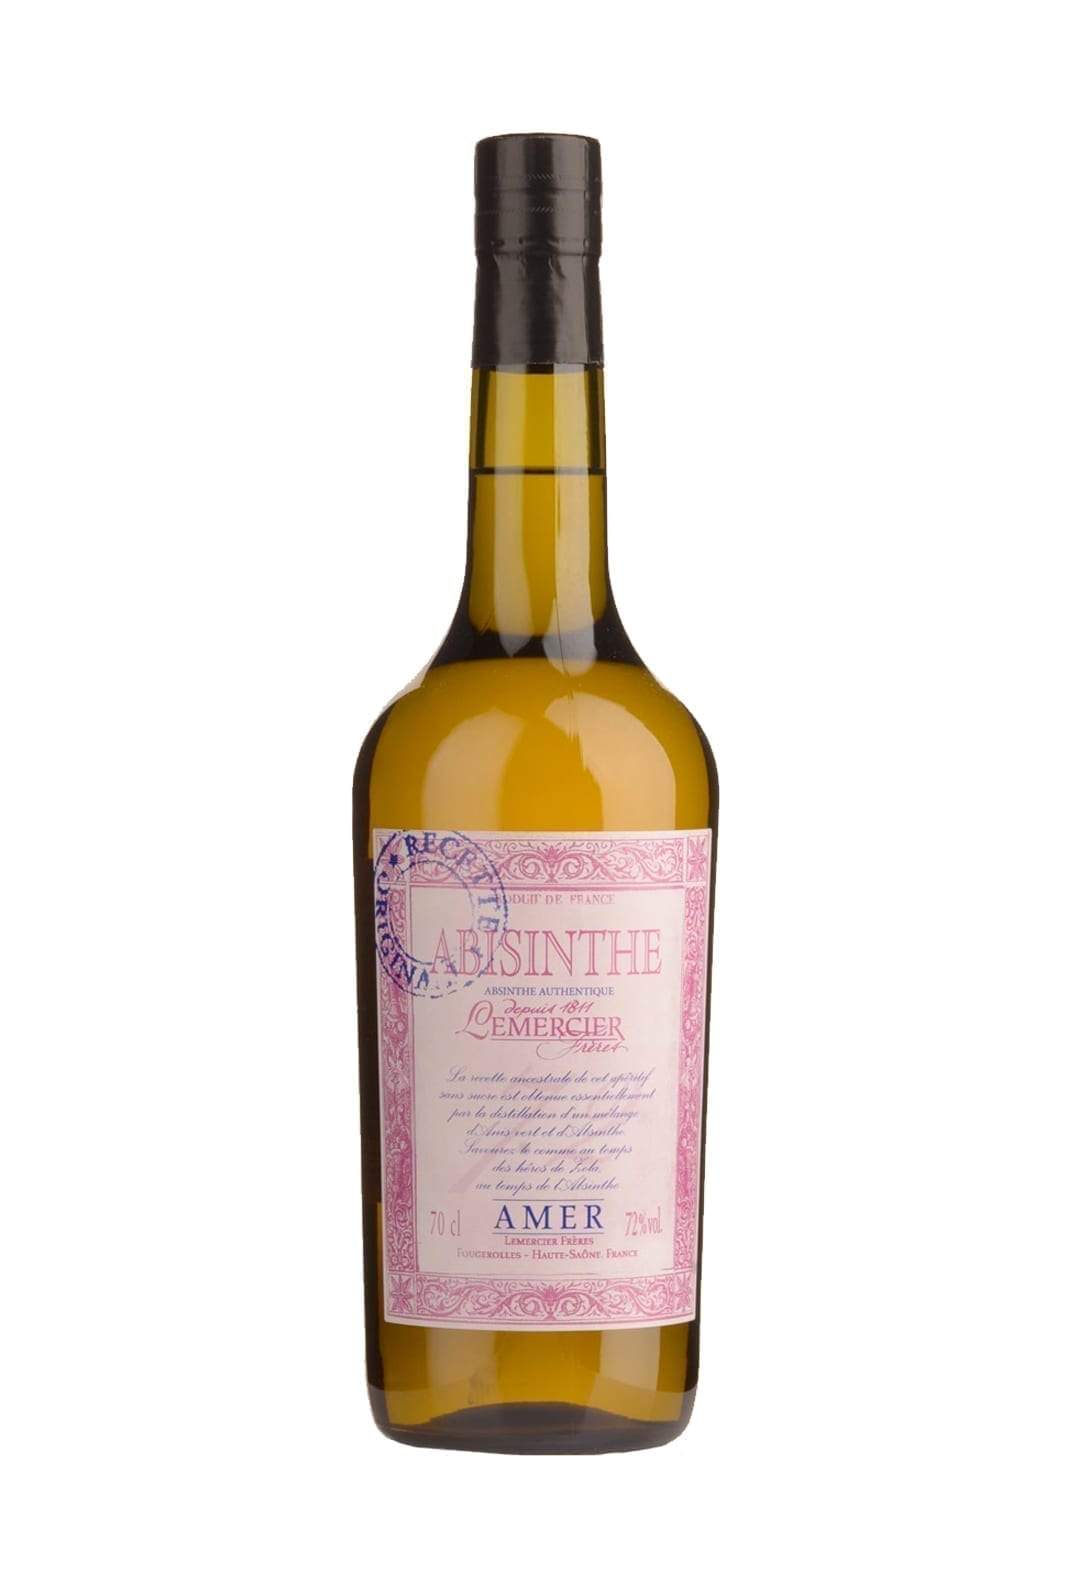 Lemercier Absinthe Amer Pink 72% 700ml | Absinthe | Shop online at Spirits of France